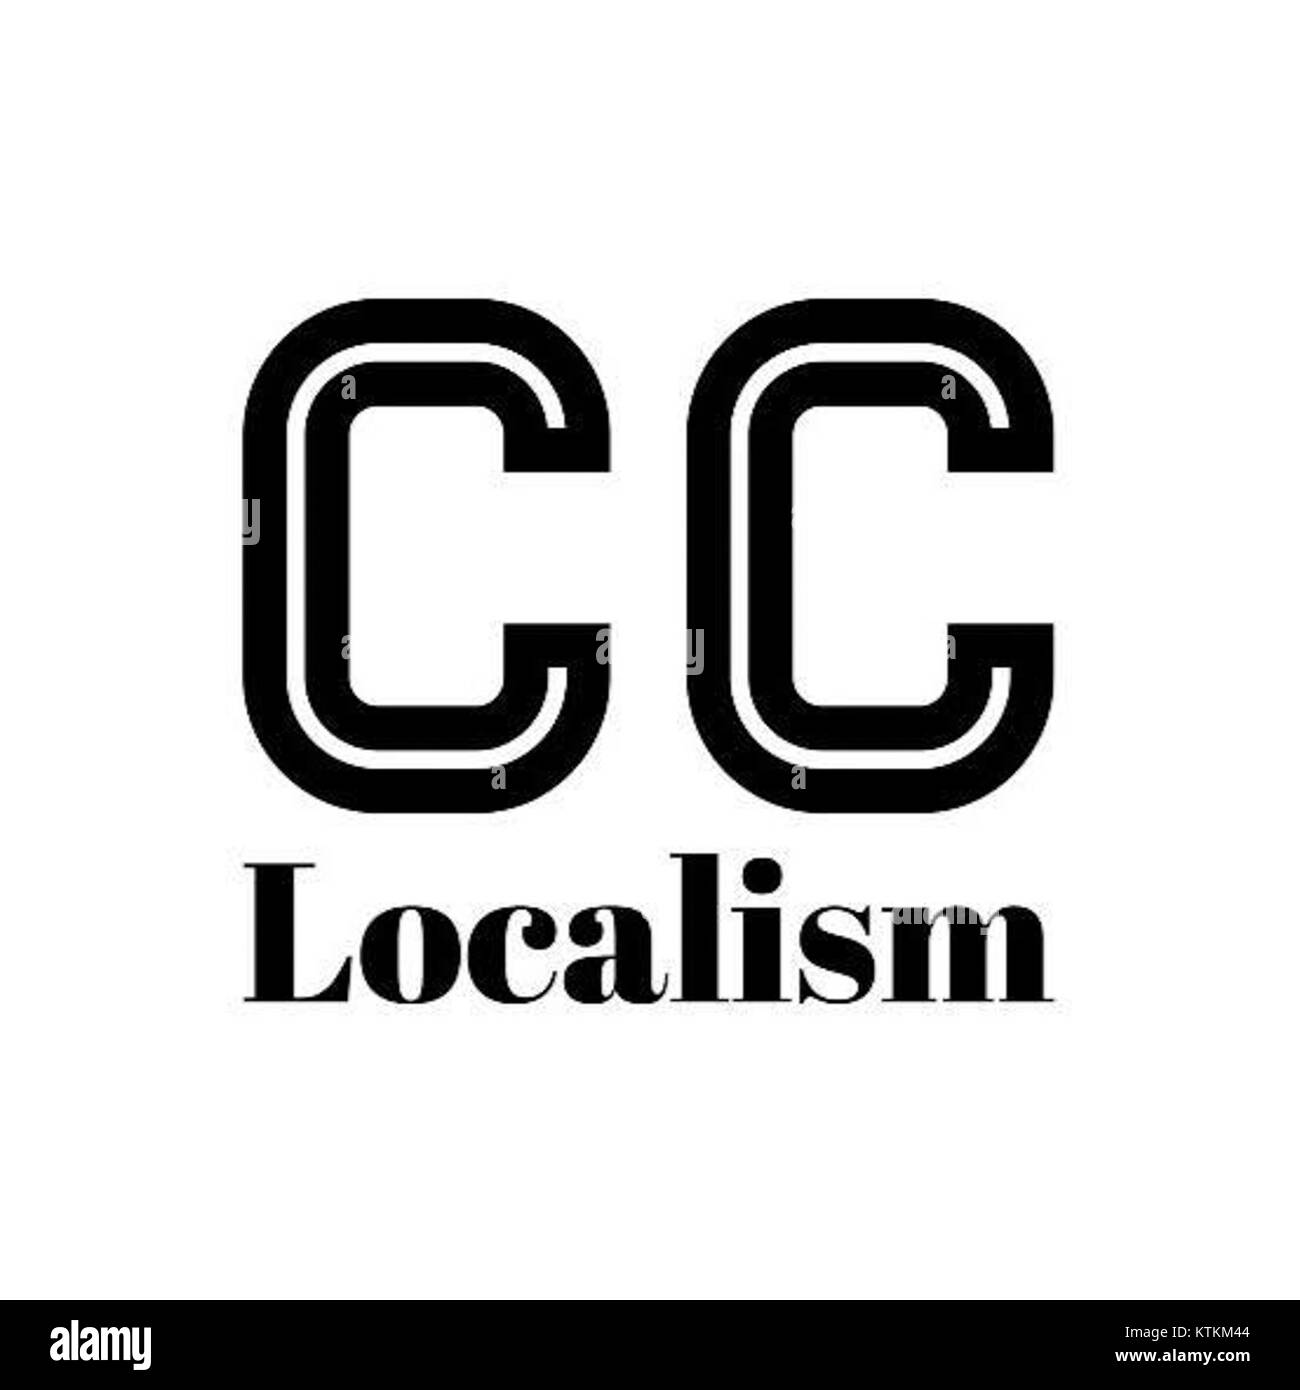 CC Localism Logo Stock Photo